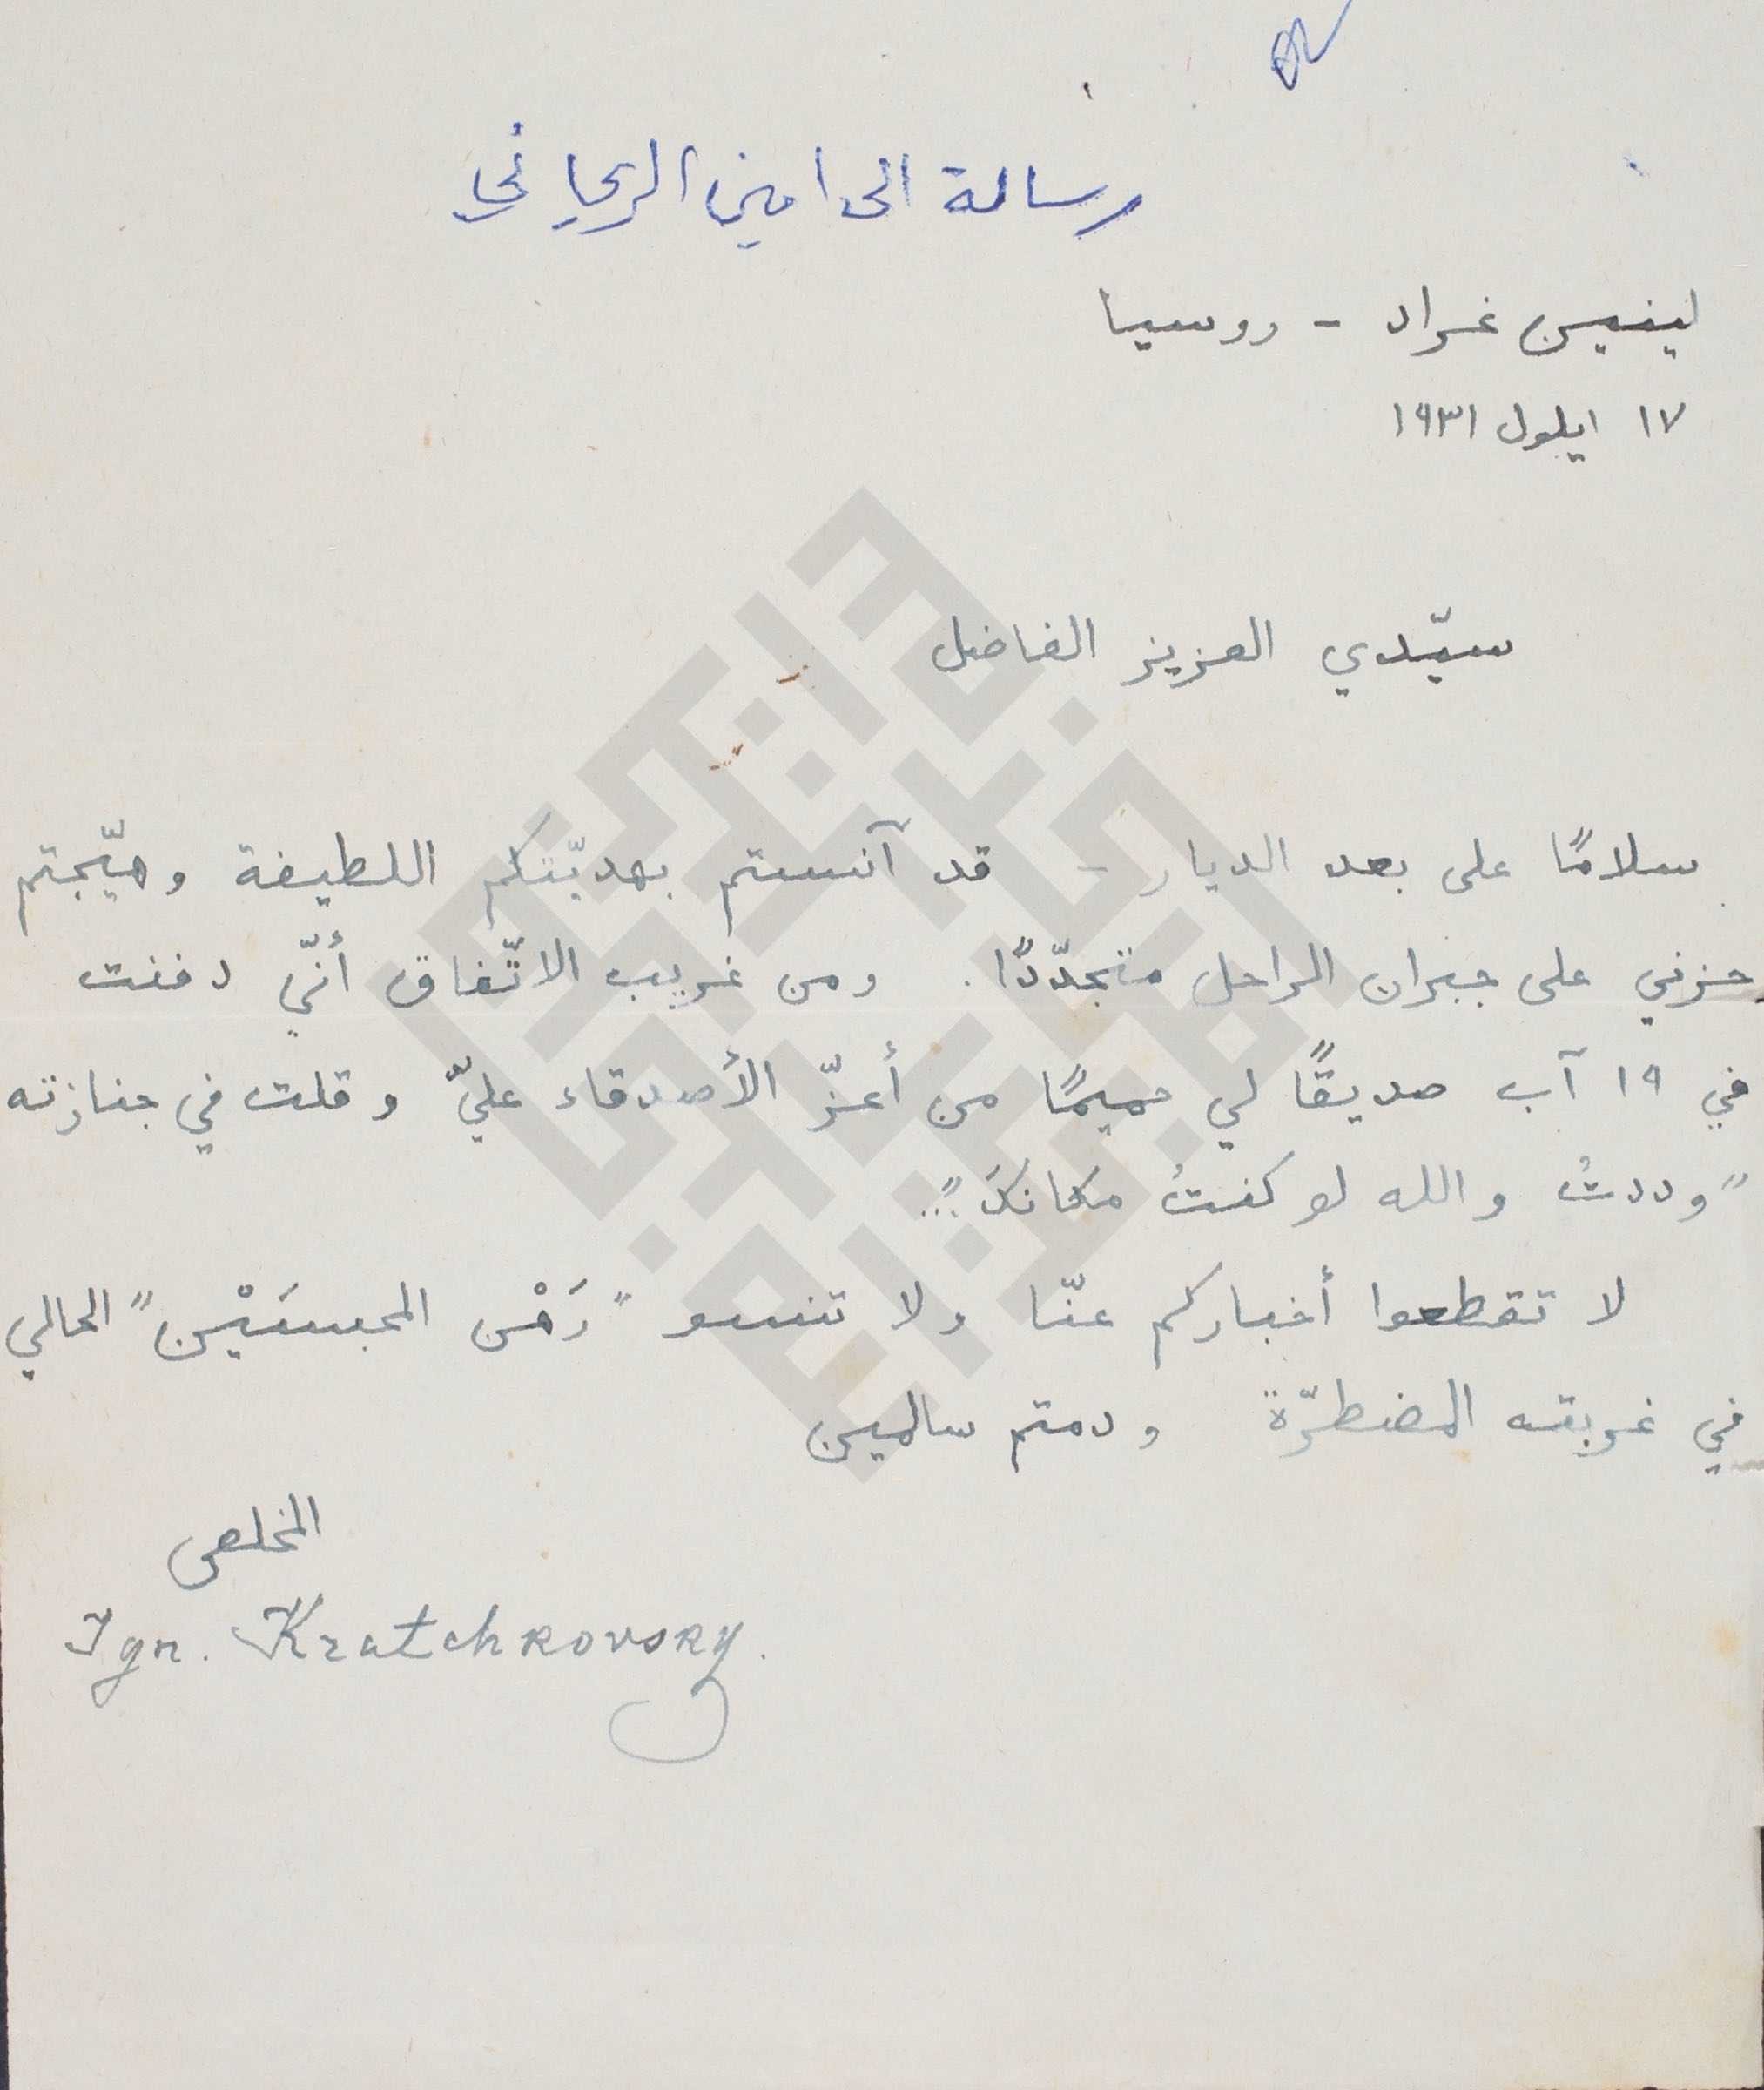 Ignaty Krachkovsky's letter to Ameen Rihani